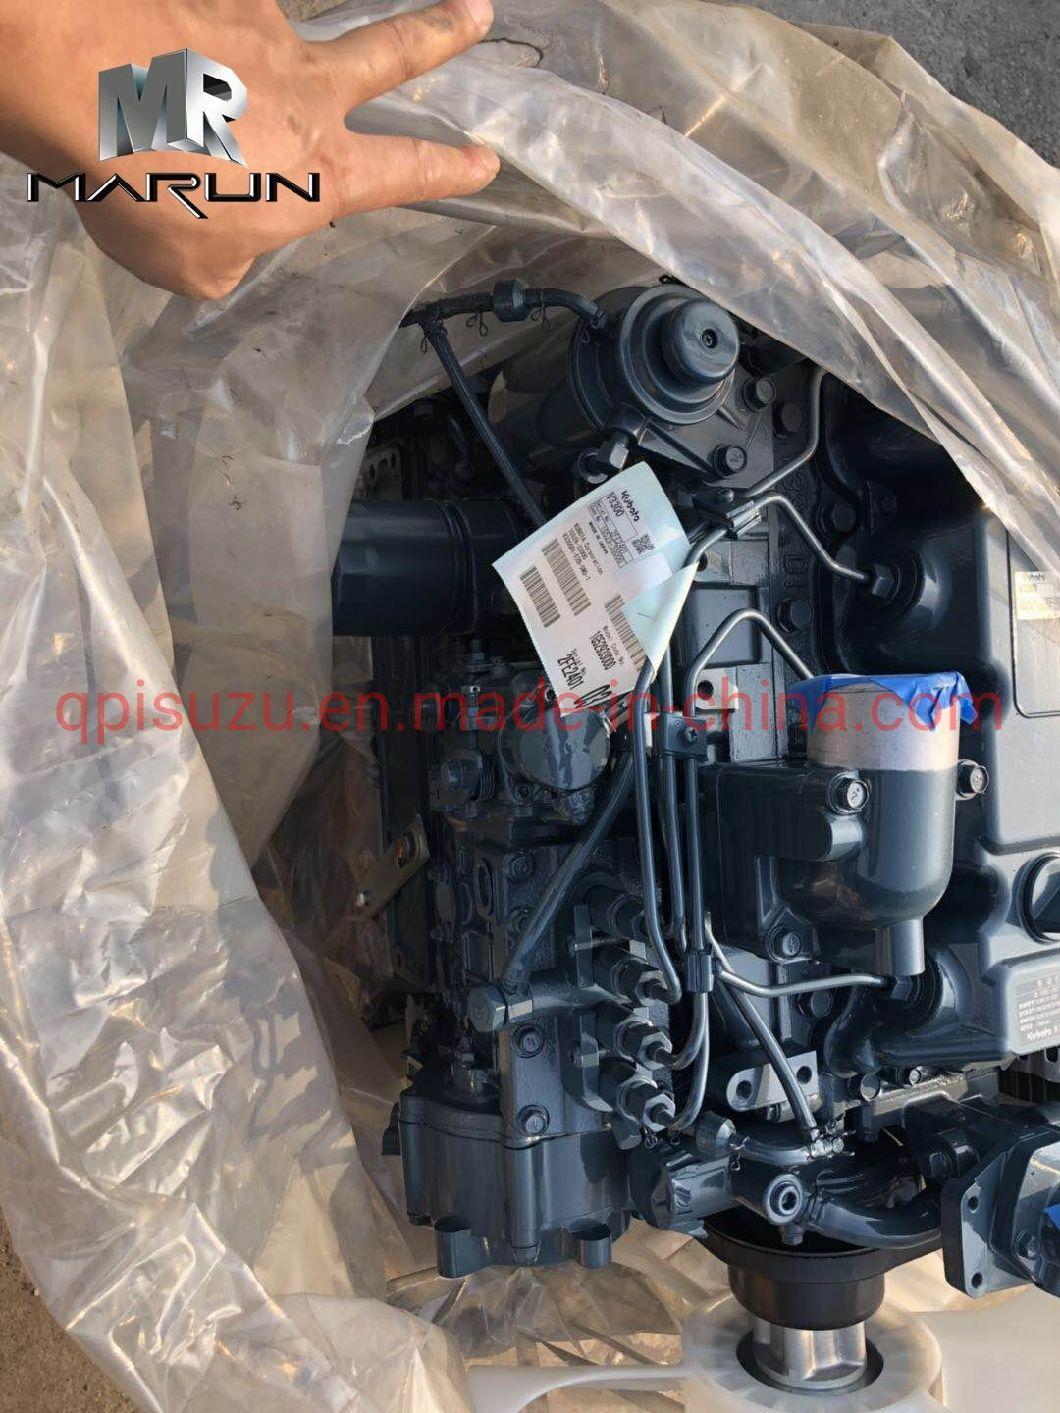 Kubota Complete Engine Assembly for V3300 Direct Injection